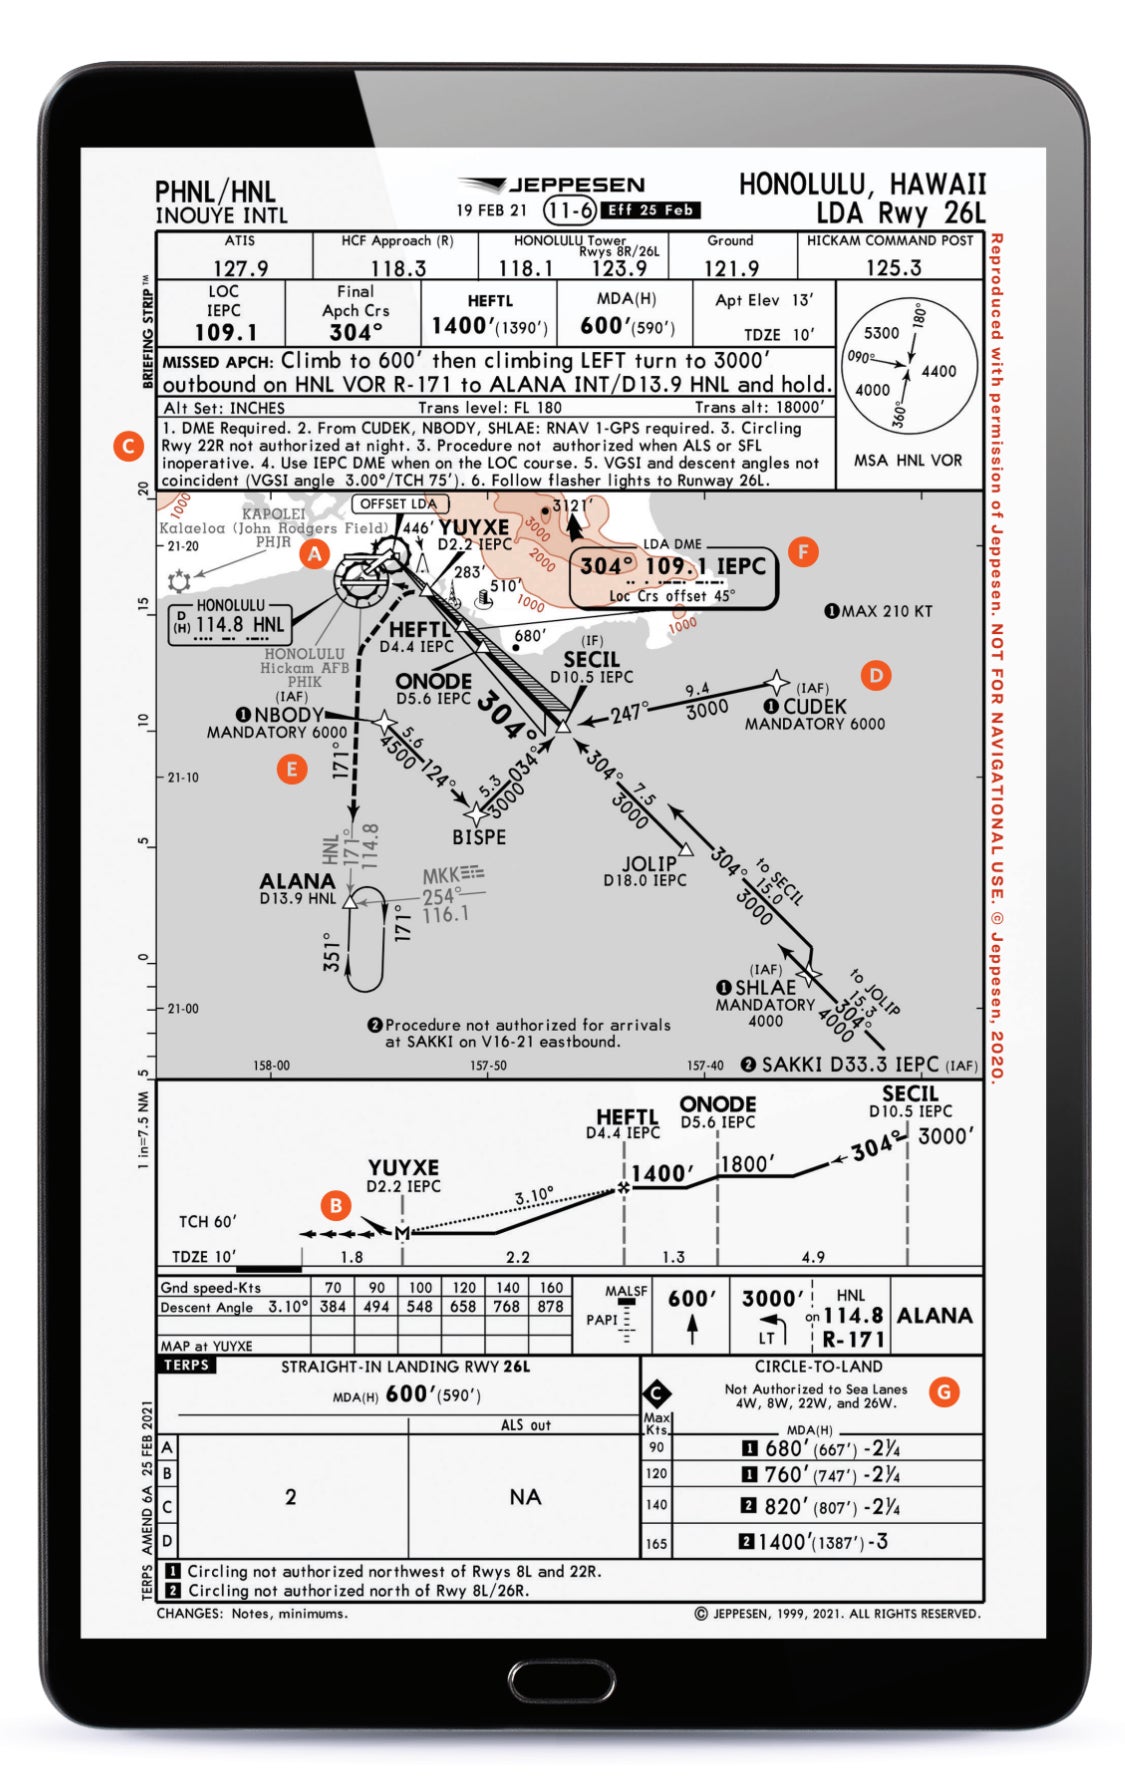 The Unique Approach to Honolulu&#8217;s LDA RWY 26L (PHNL)